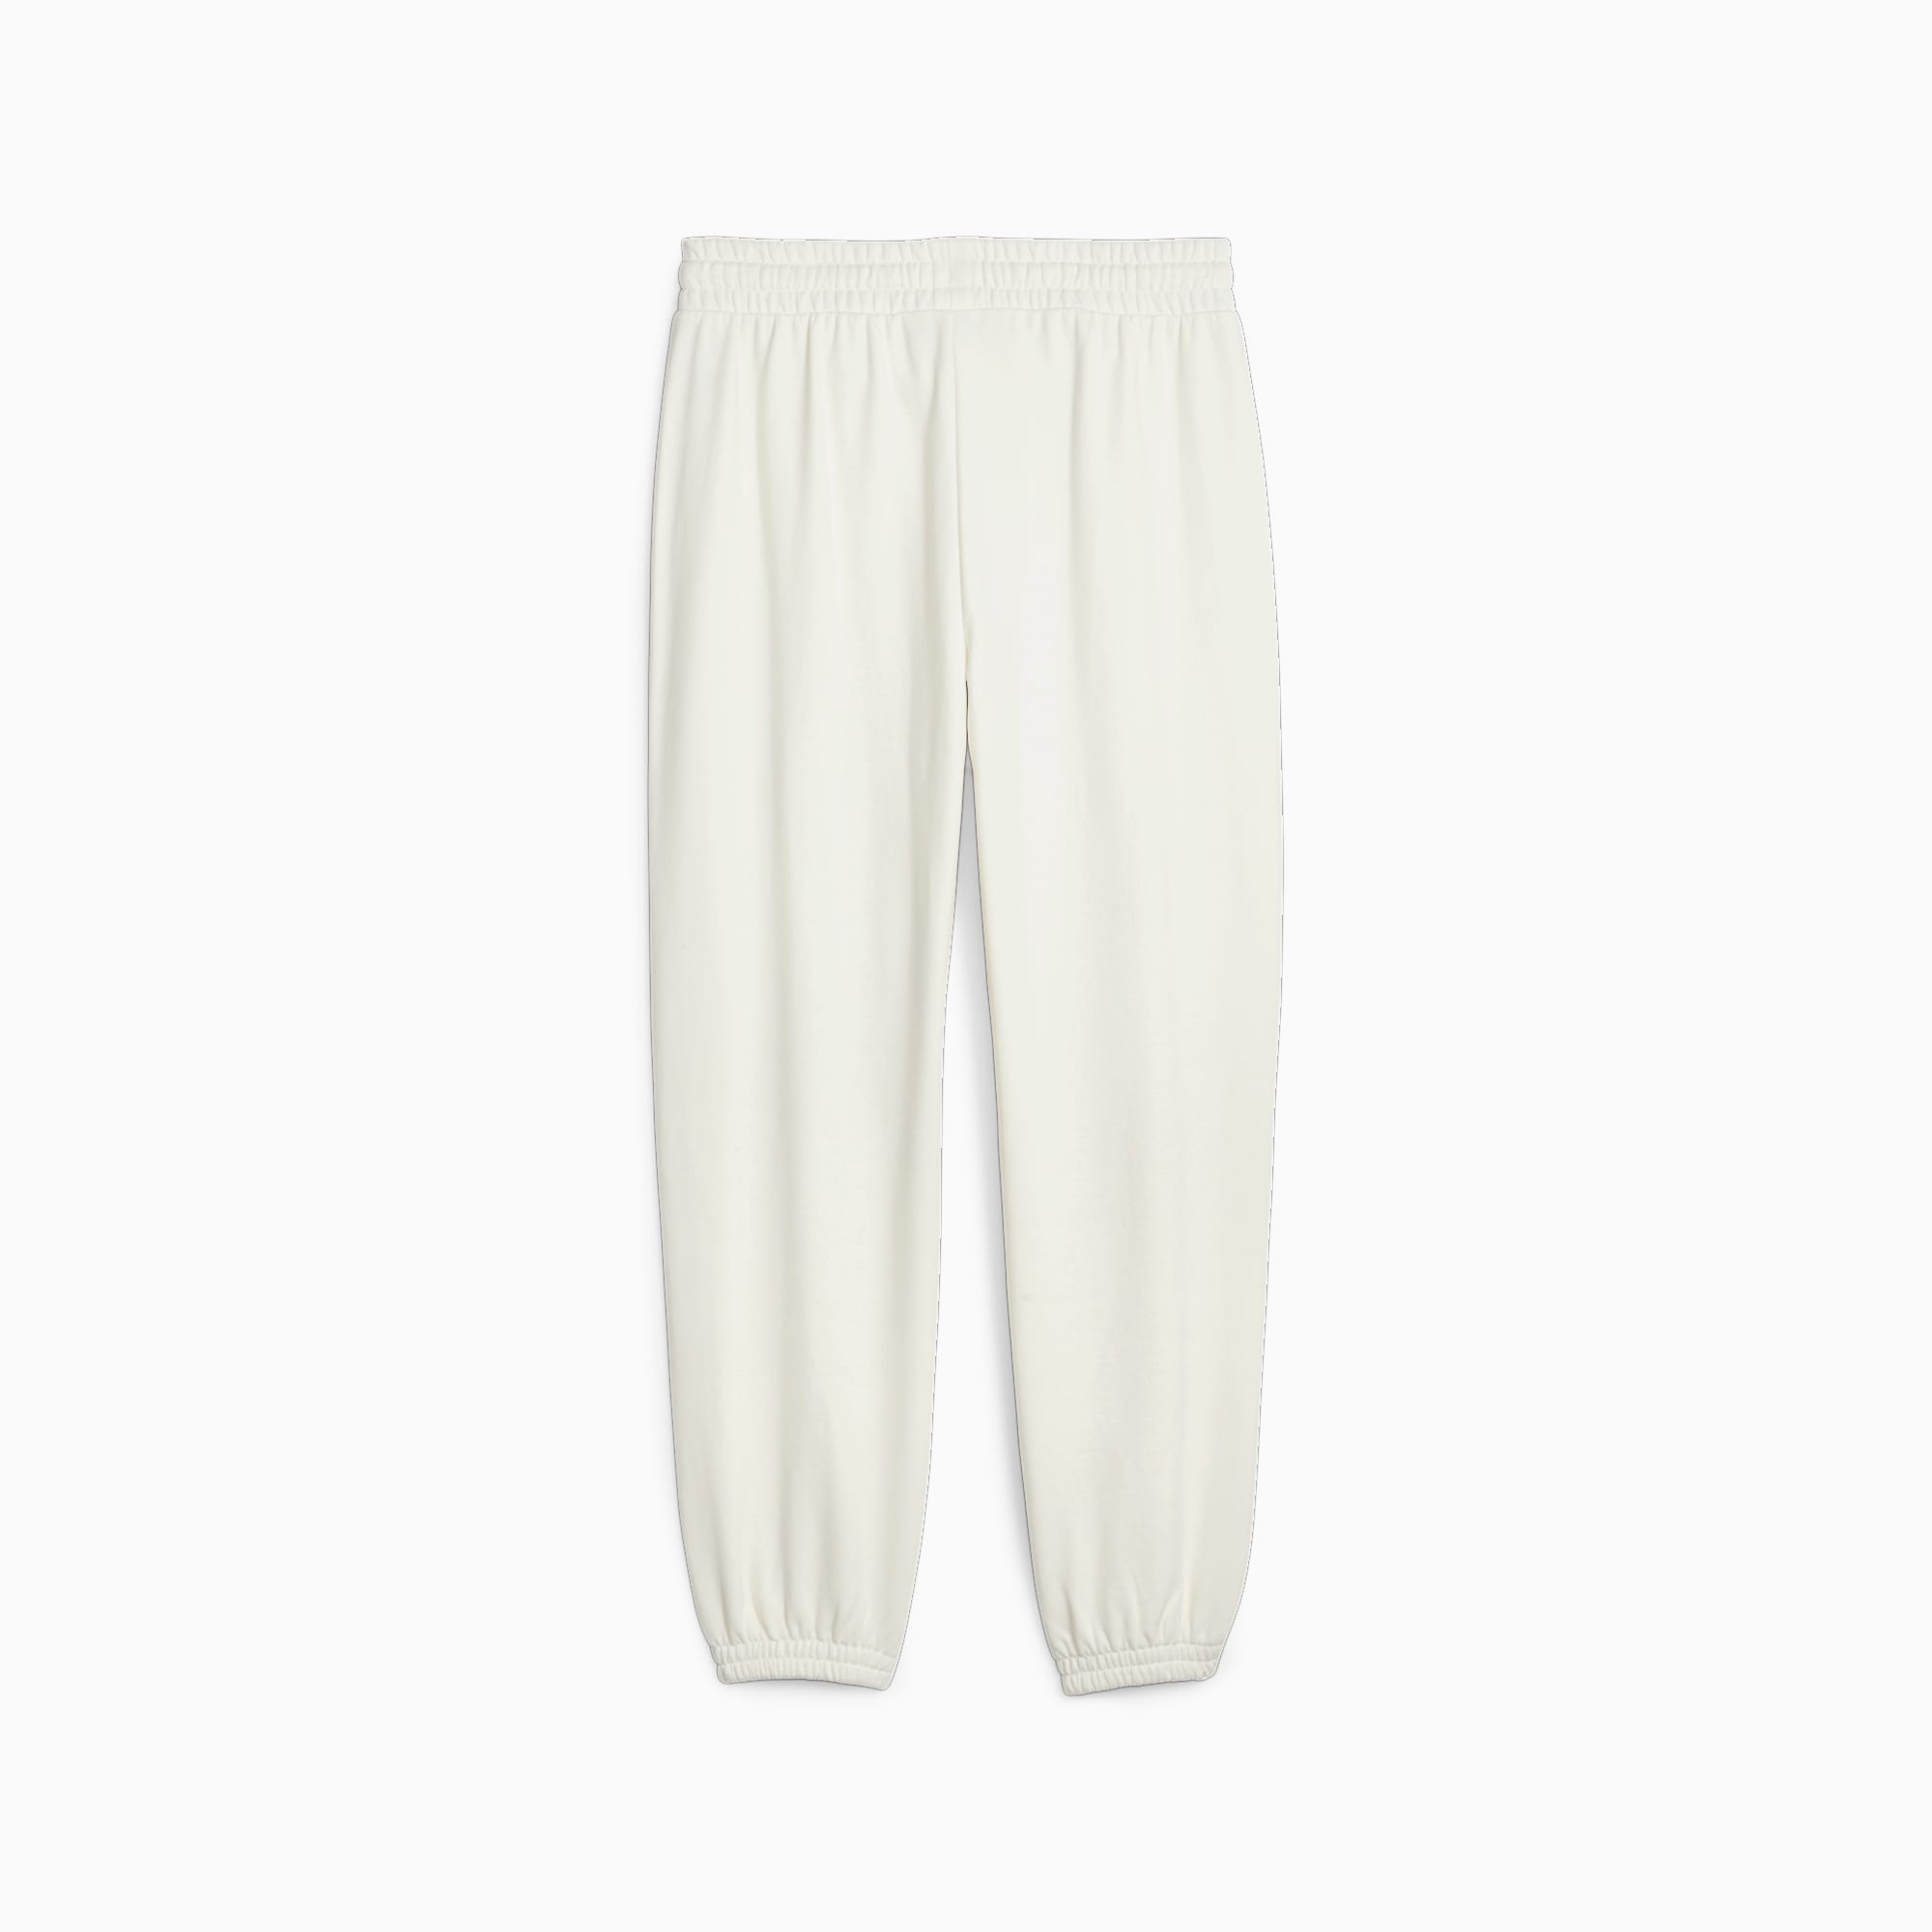 PUMA Pantalones De Chándal Downtown Para Mujer, Blanco